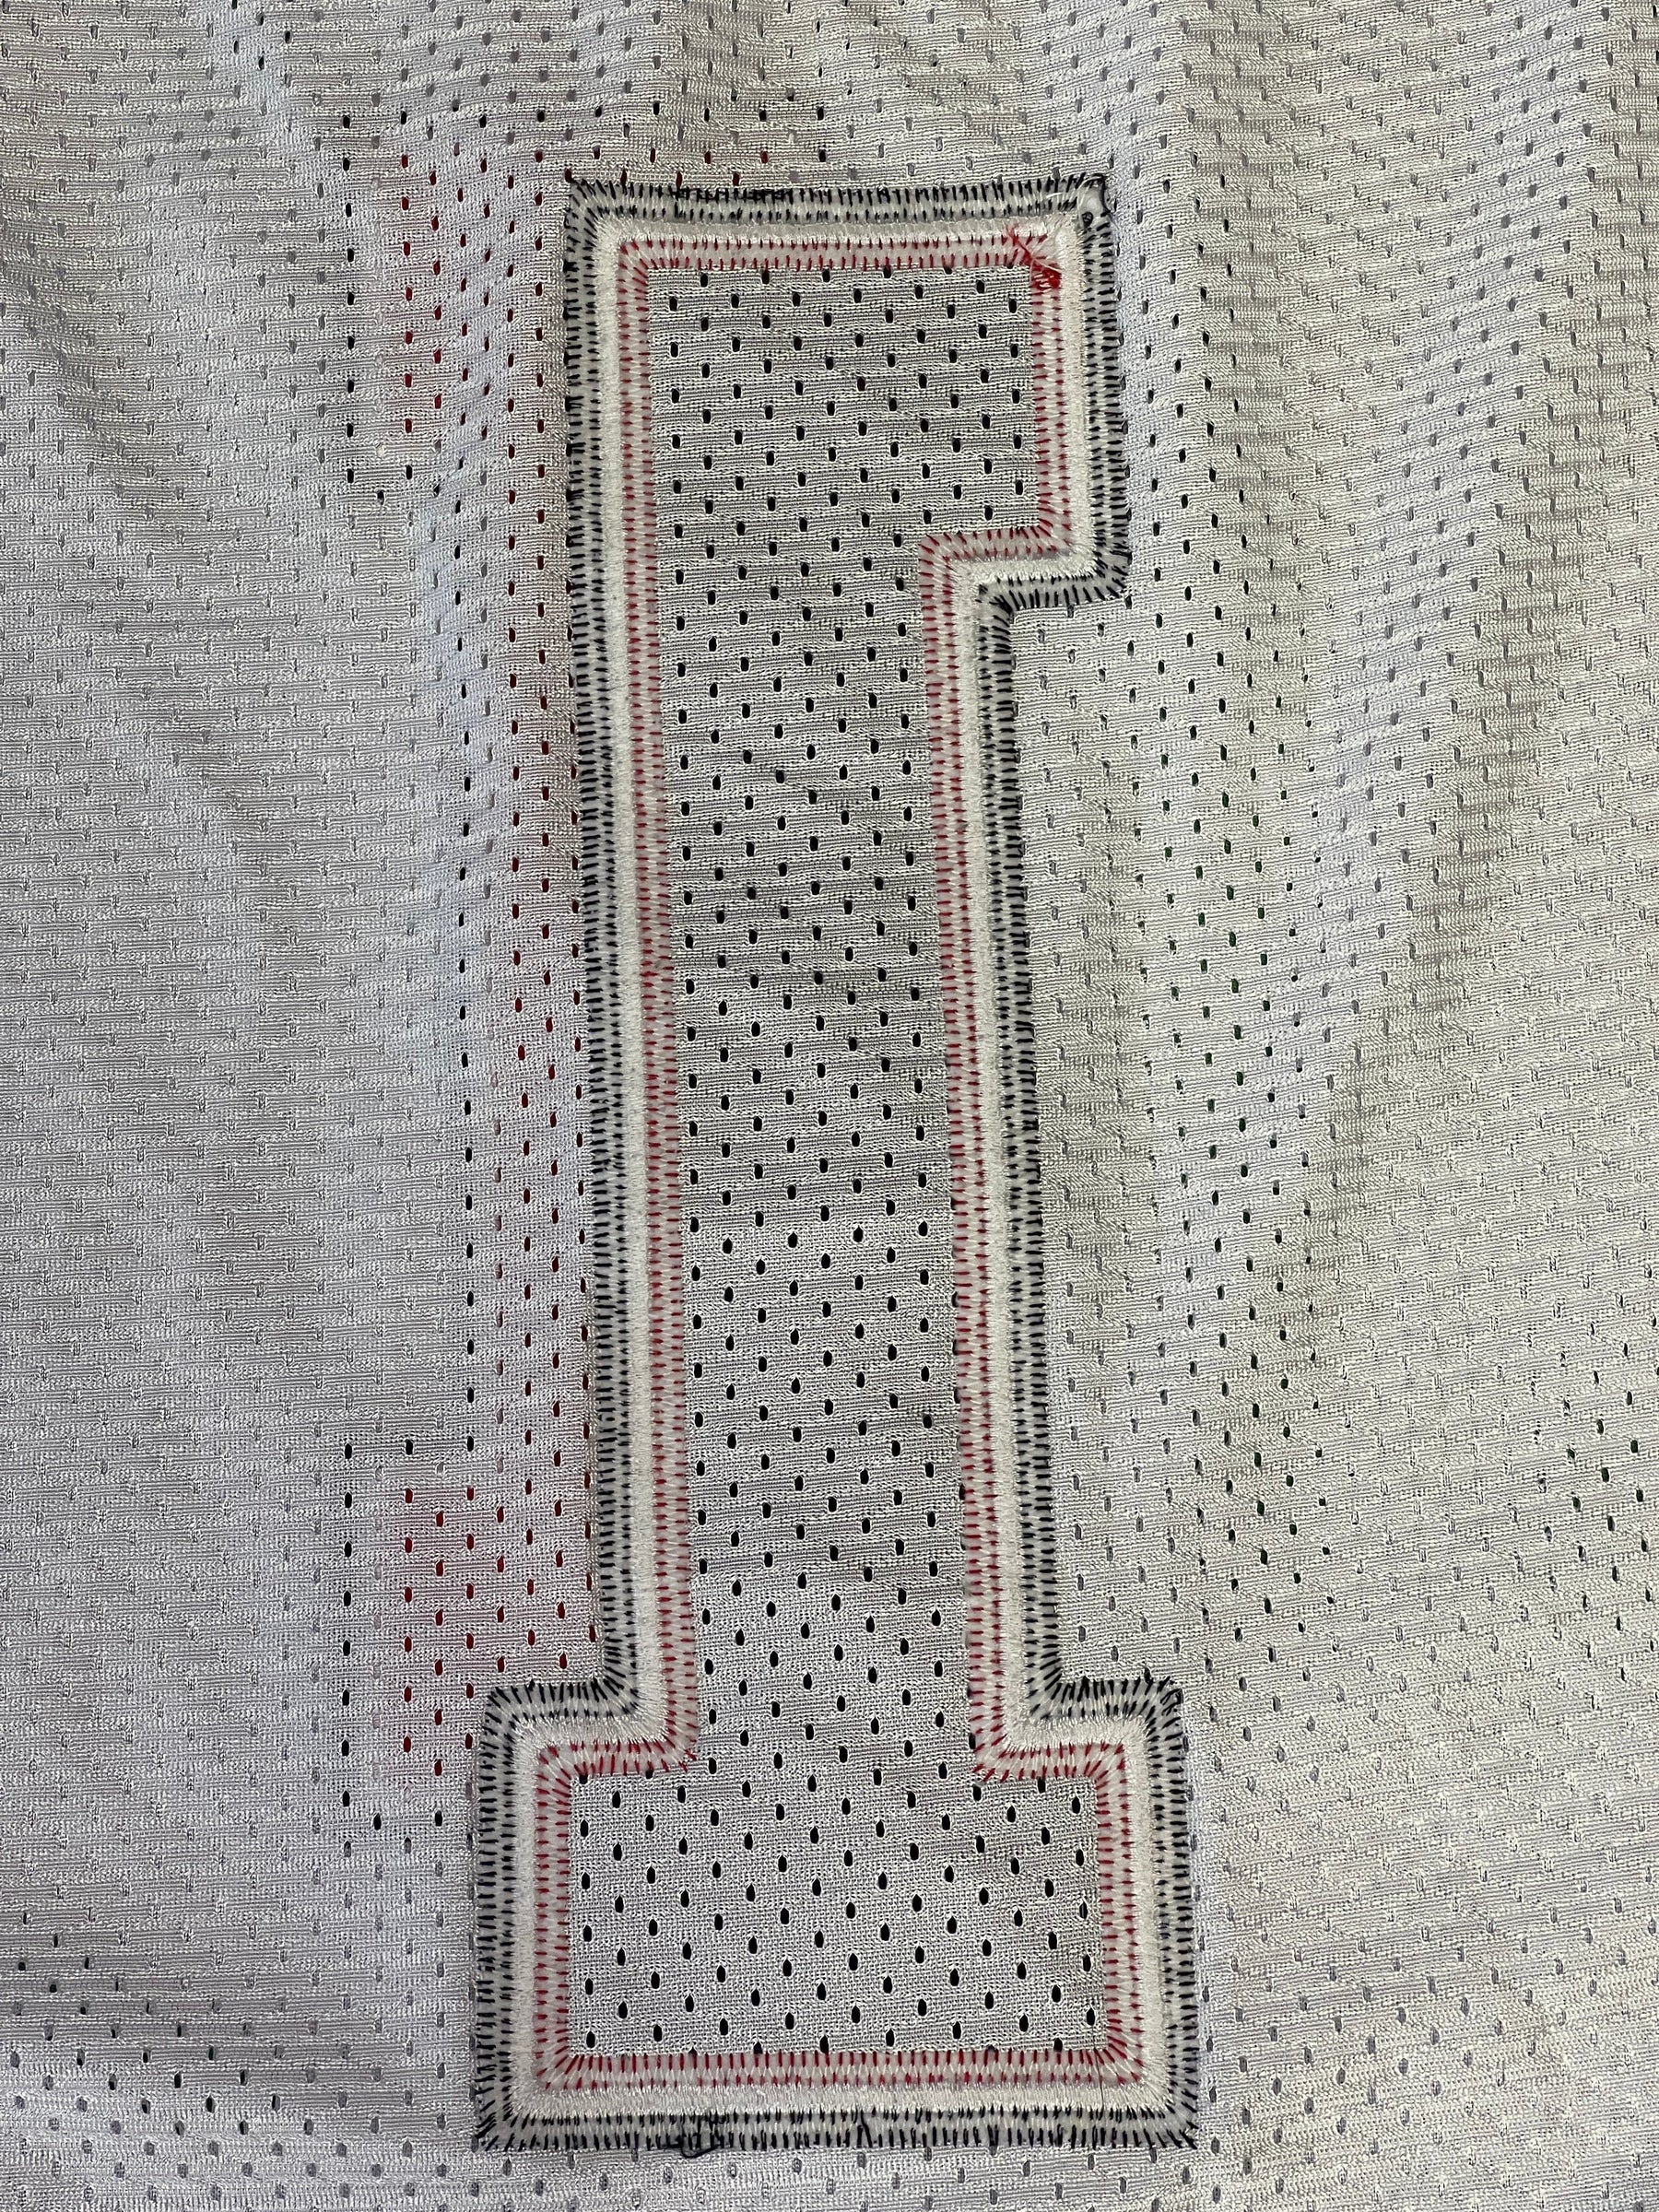 NCAA Nebraska Cornhuskers Colosseum #1 Stitched Mesh Jersey Men's 2X-Large